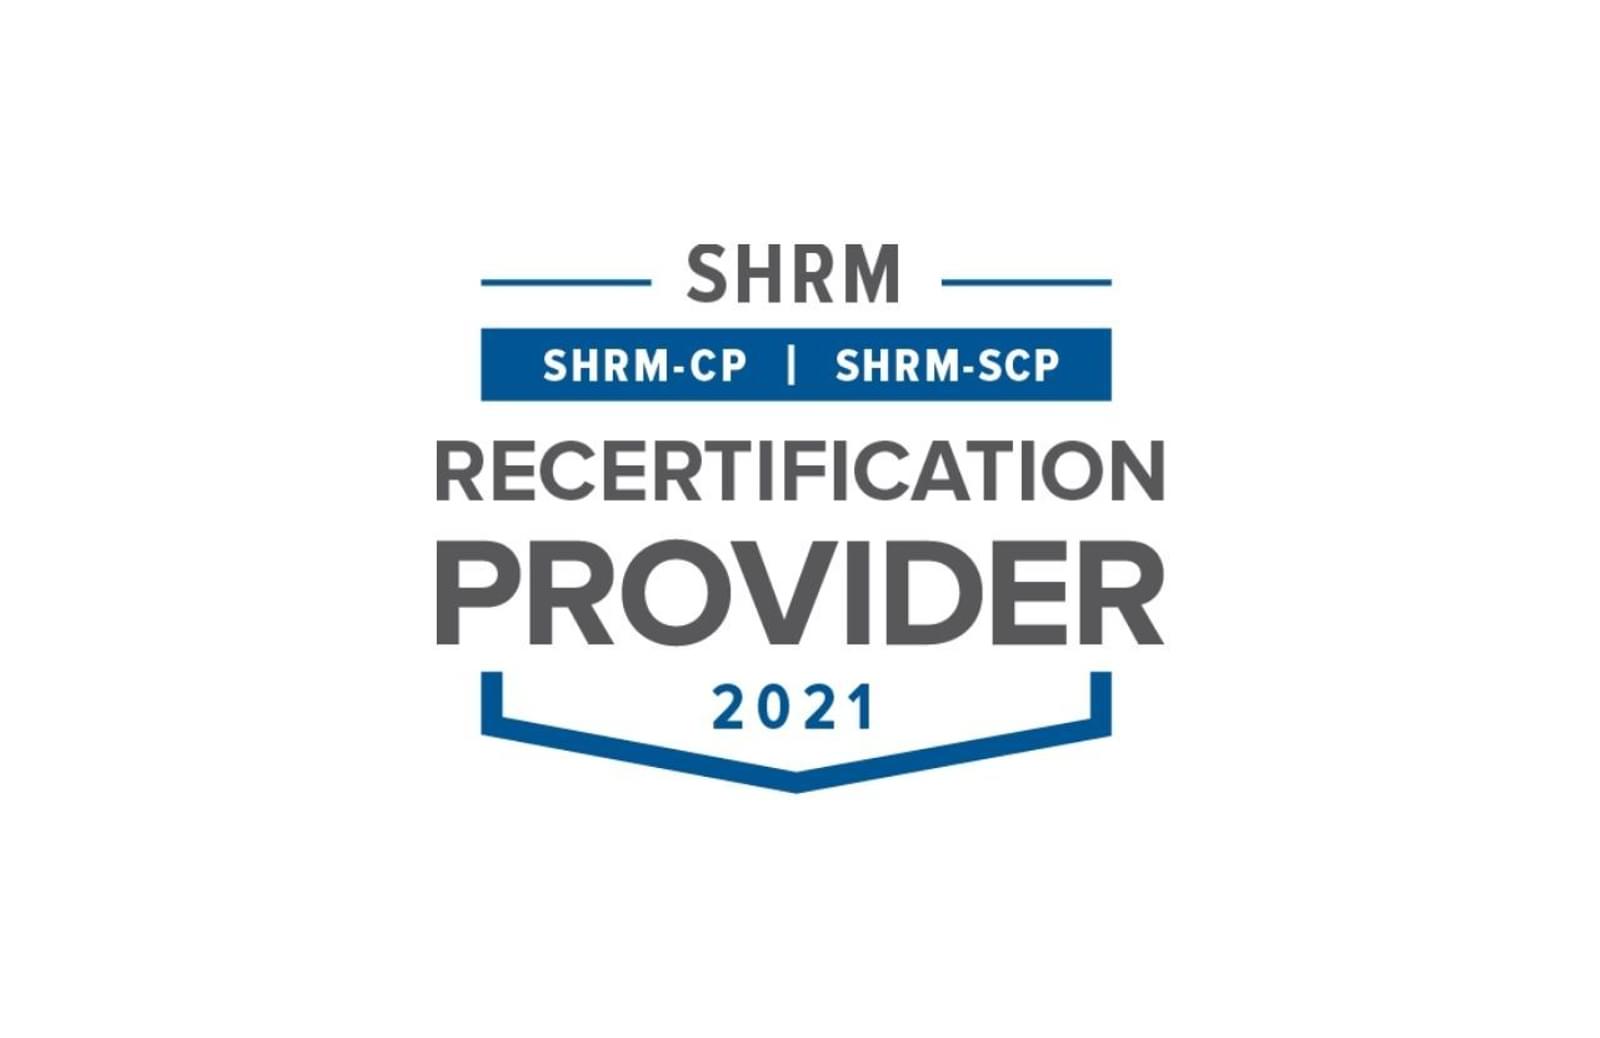 SHRM Recertification Provider Provider 2021 Seal Thumbnail